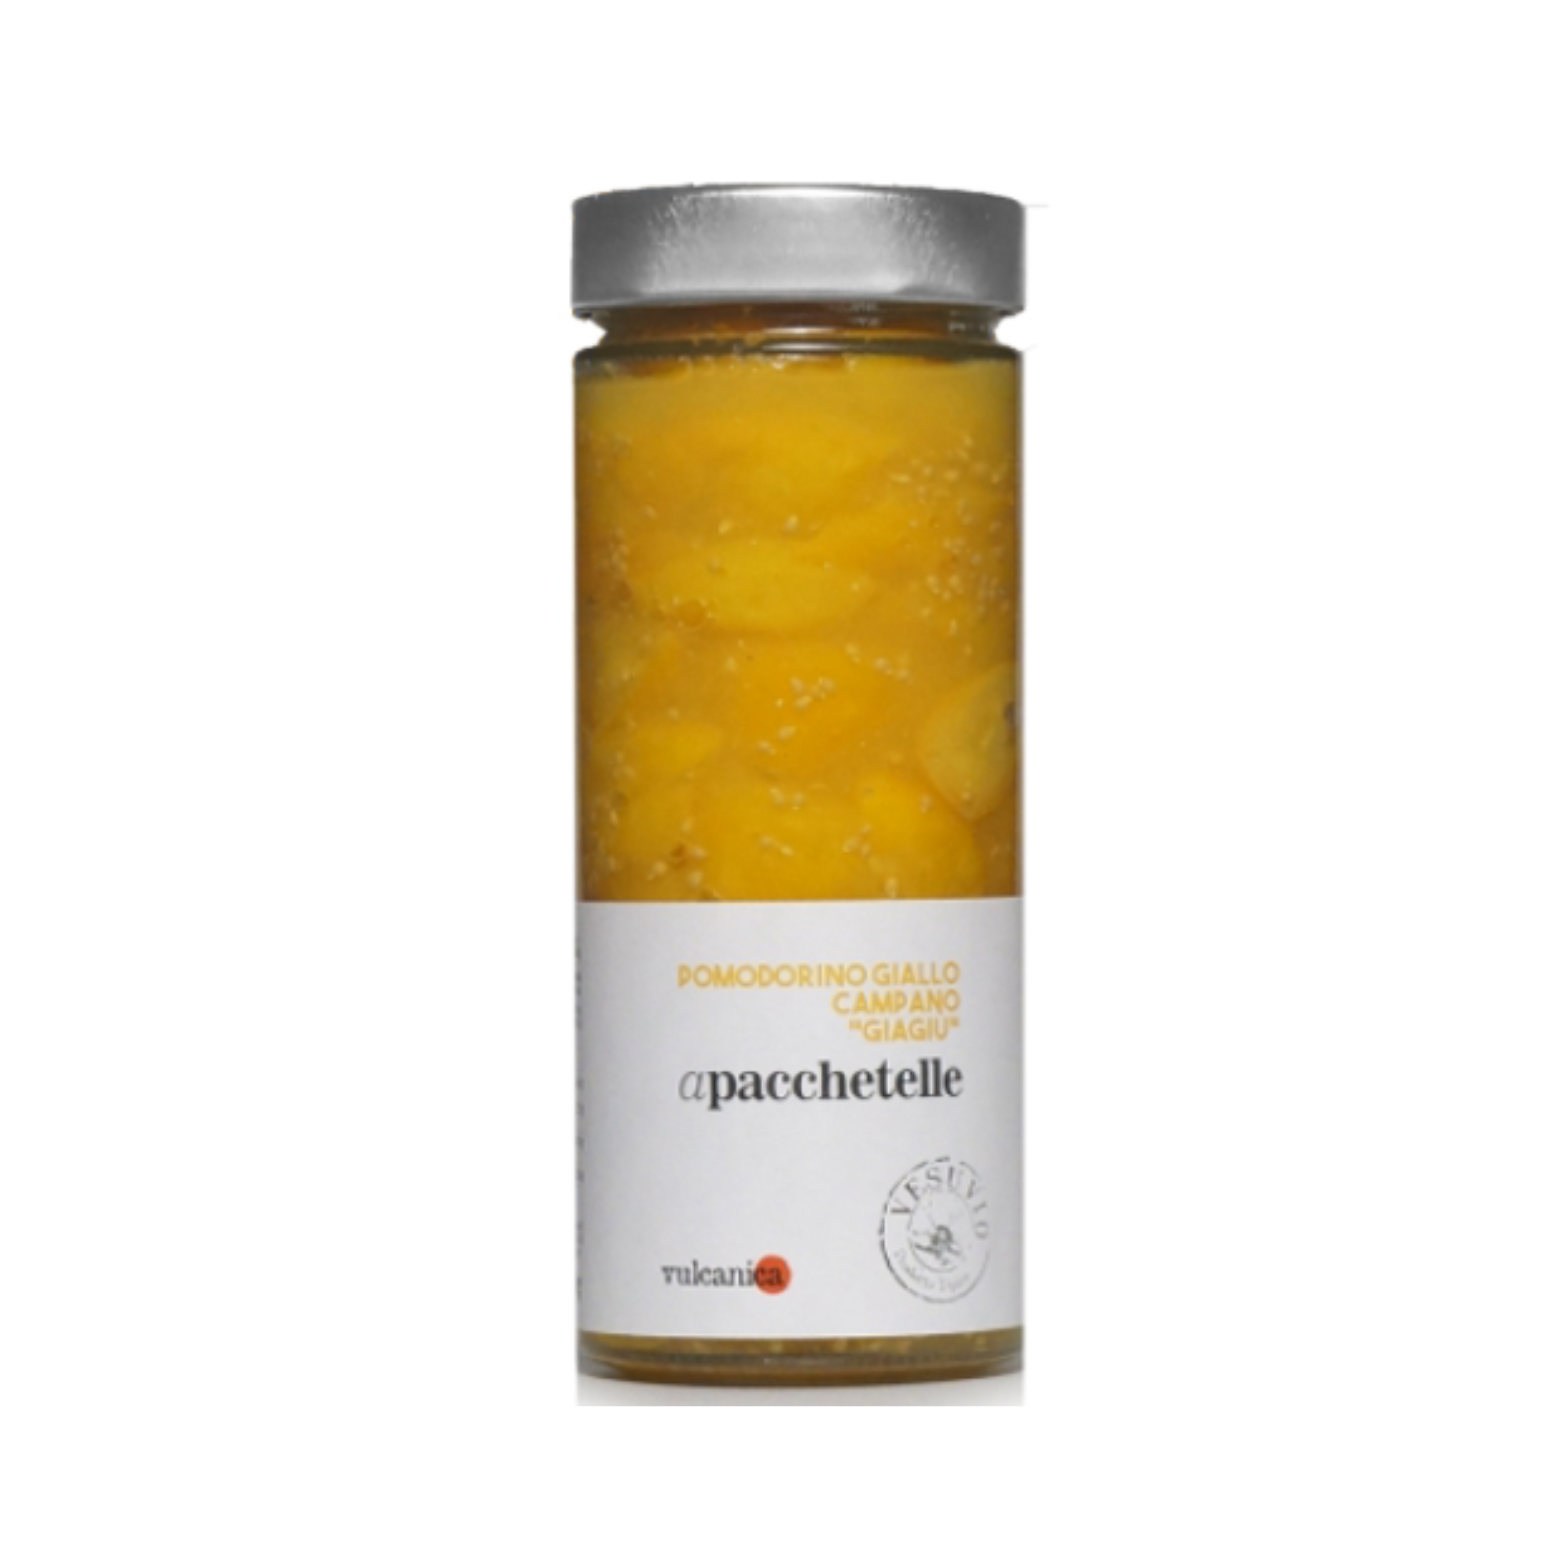 Pomodorino Giallo Campano apacchetelle – aus dem Vesuv – 550g